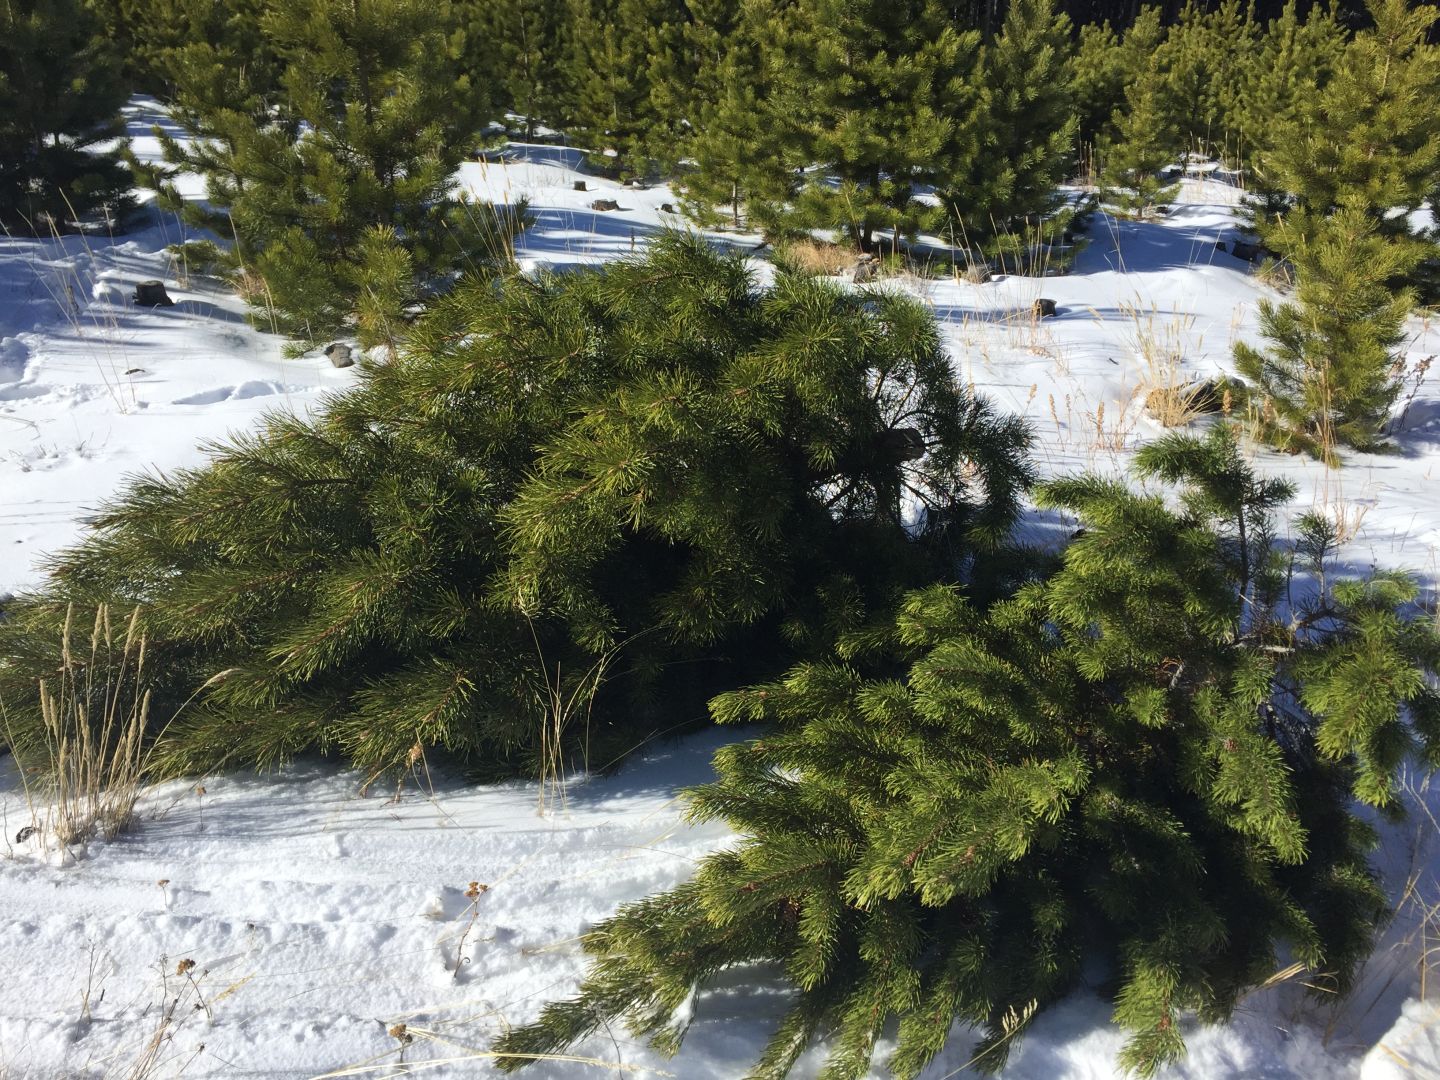 Two cut Christmas trees